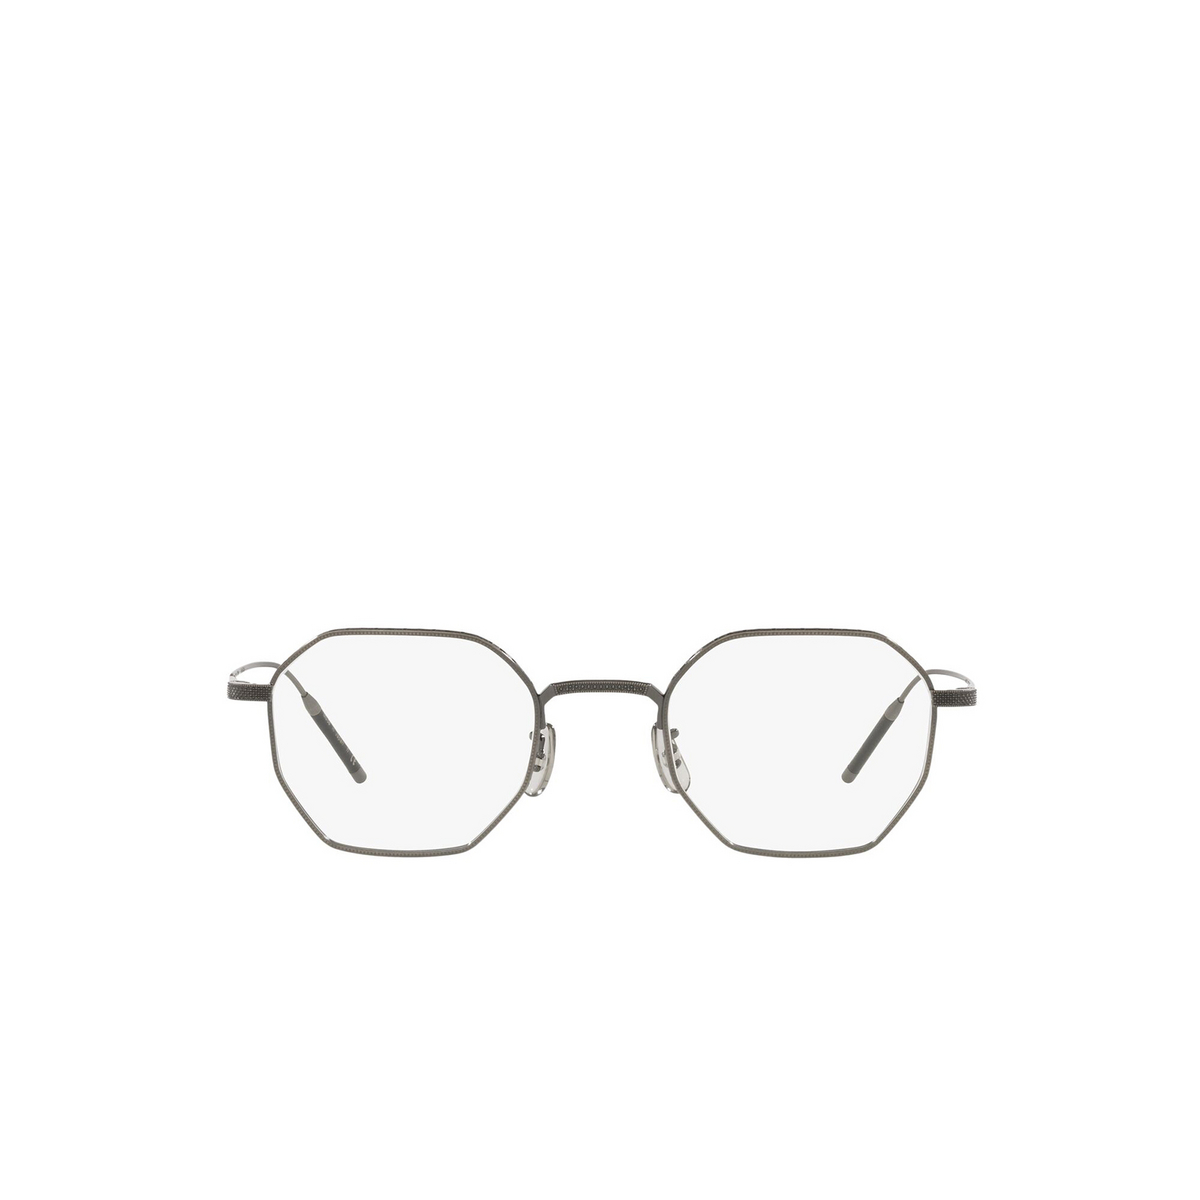 Oliver Peoples TK-5 Eyeglasses 5076 Pewter - front view